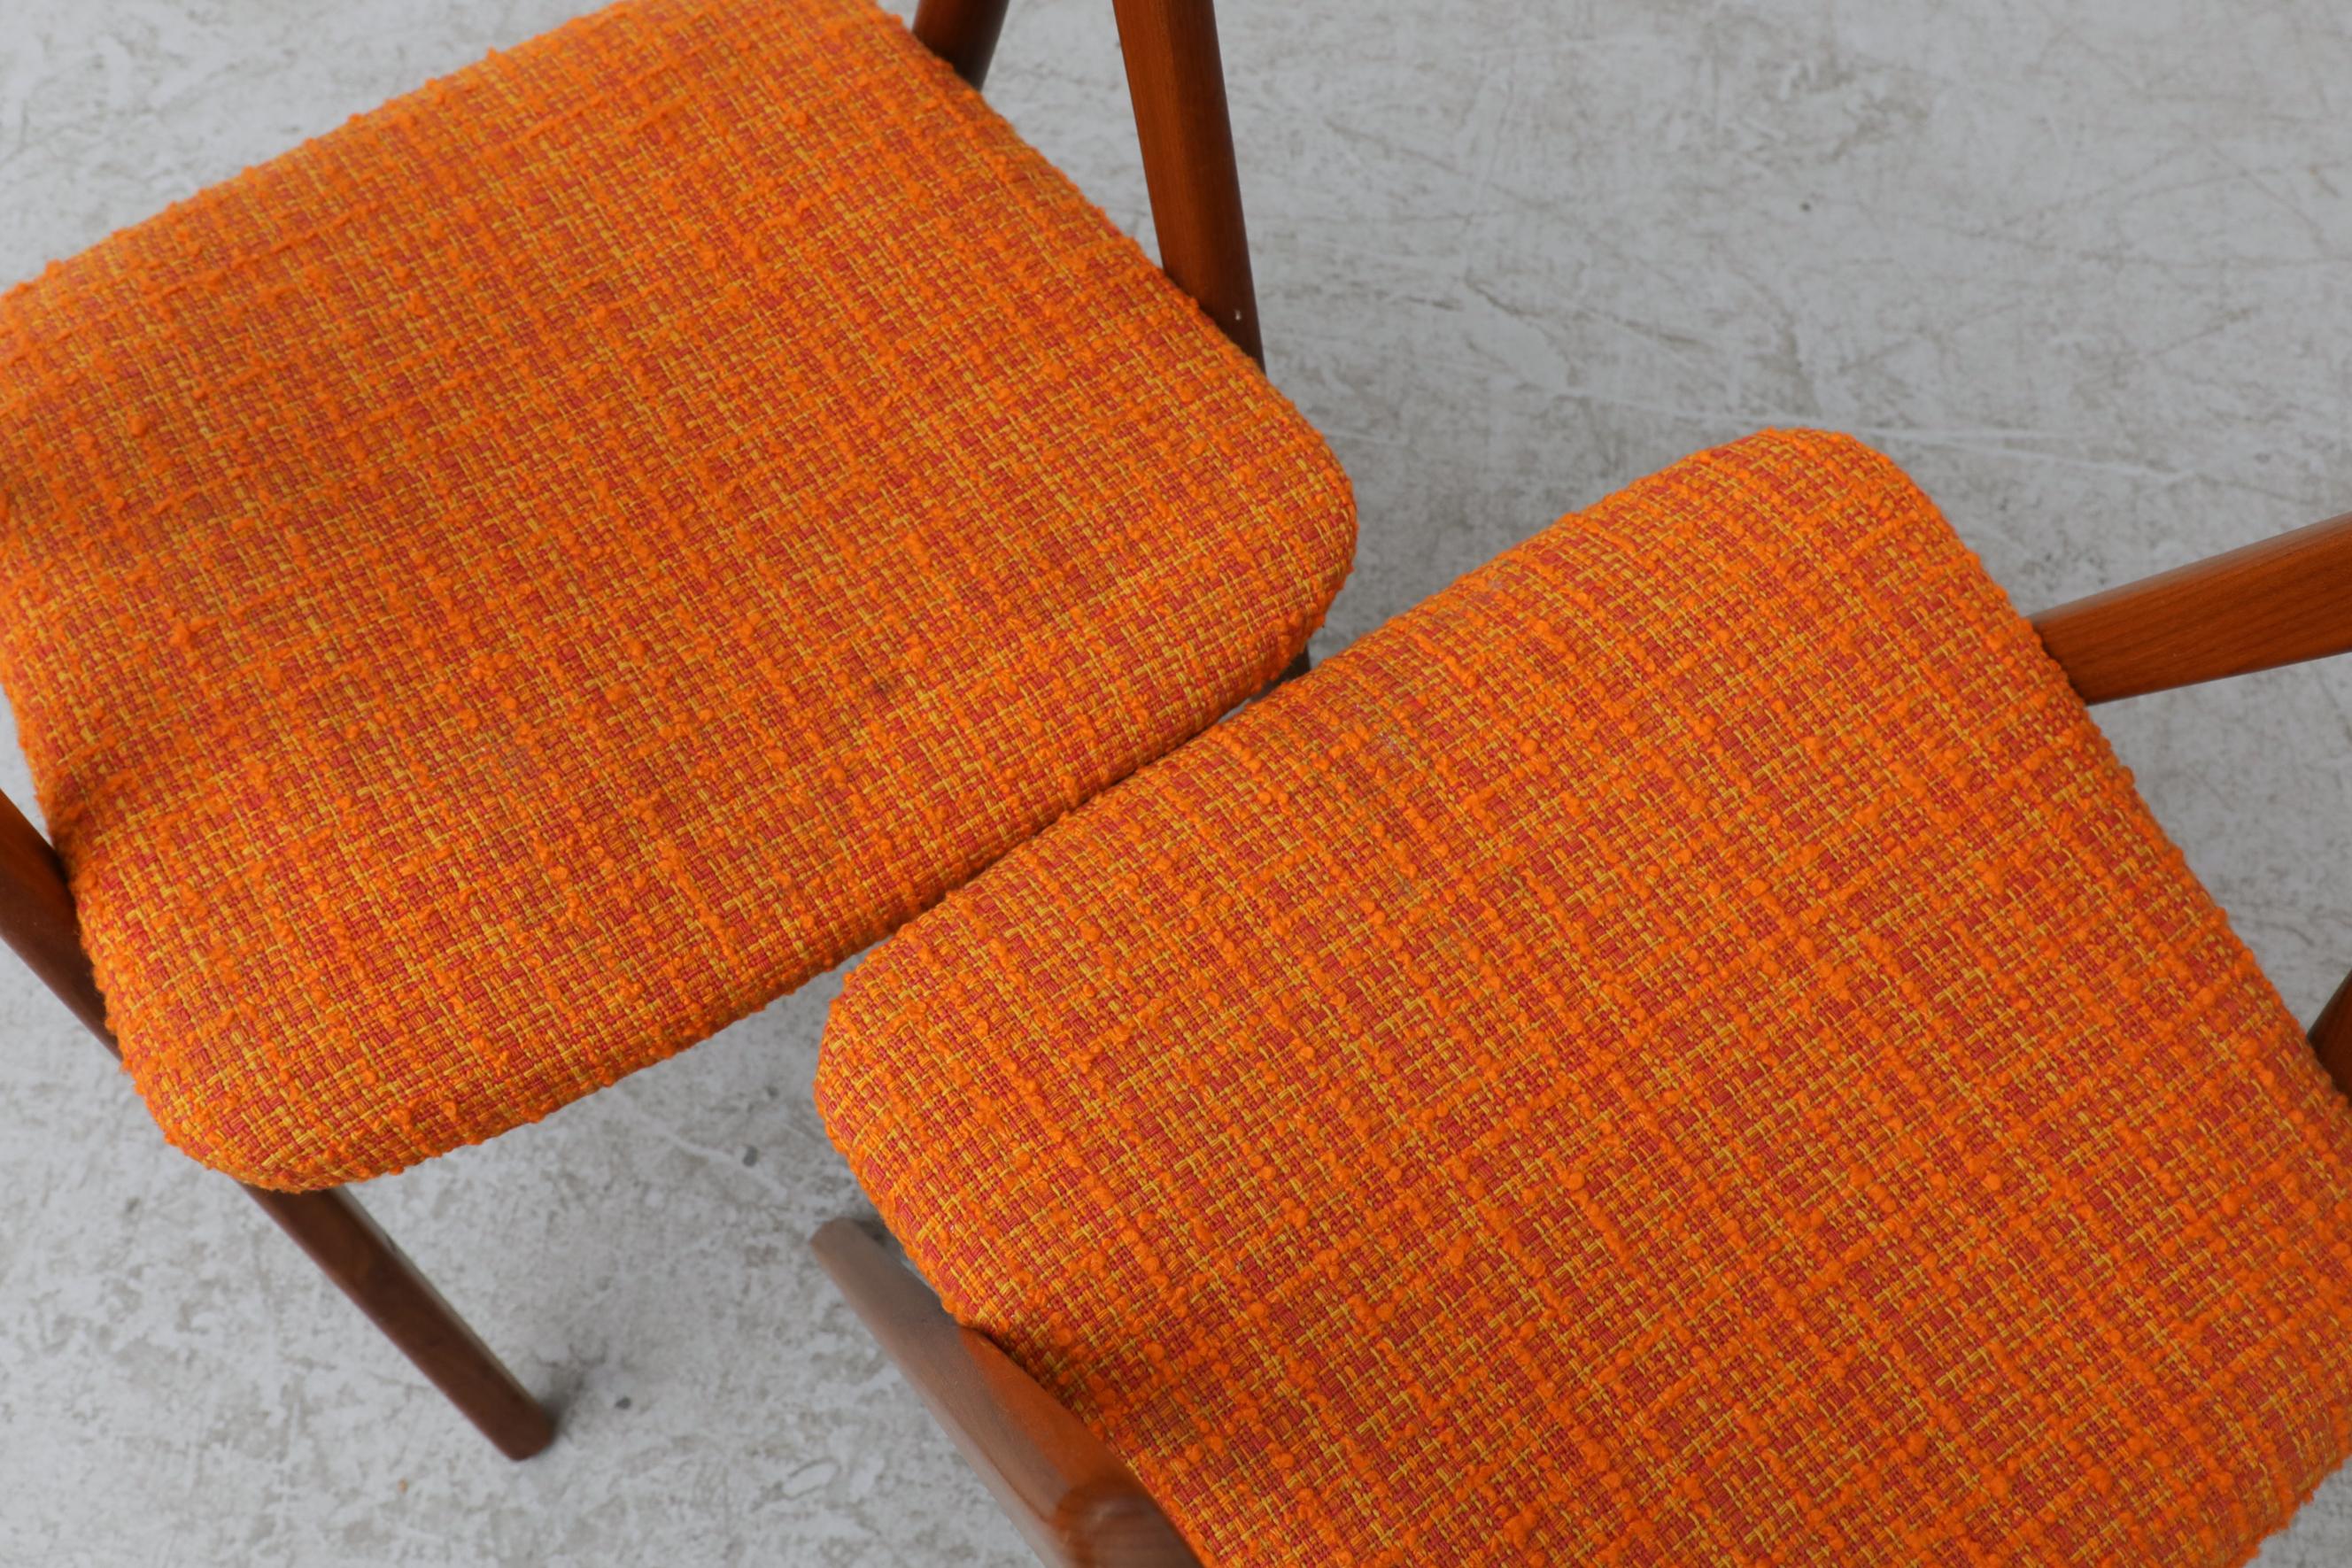 Pair of Kai Kristiansen Chairs with Original Orange Upholstered Seats 2